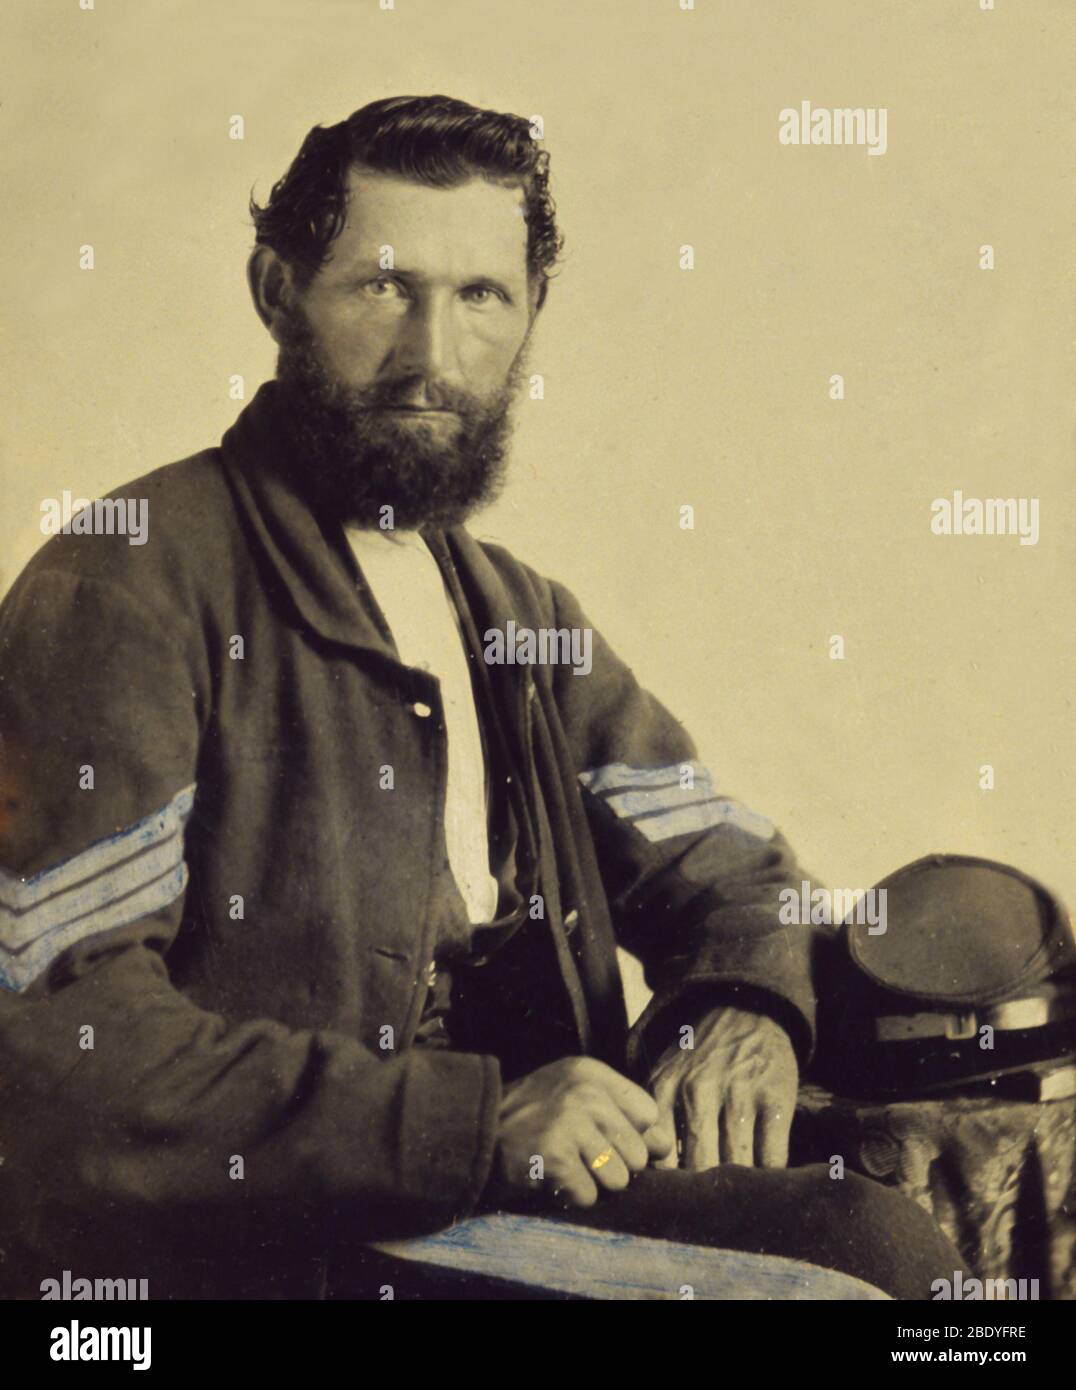 Confederate Soldier, Civil War, c. 1862 Stock Photo